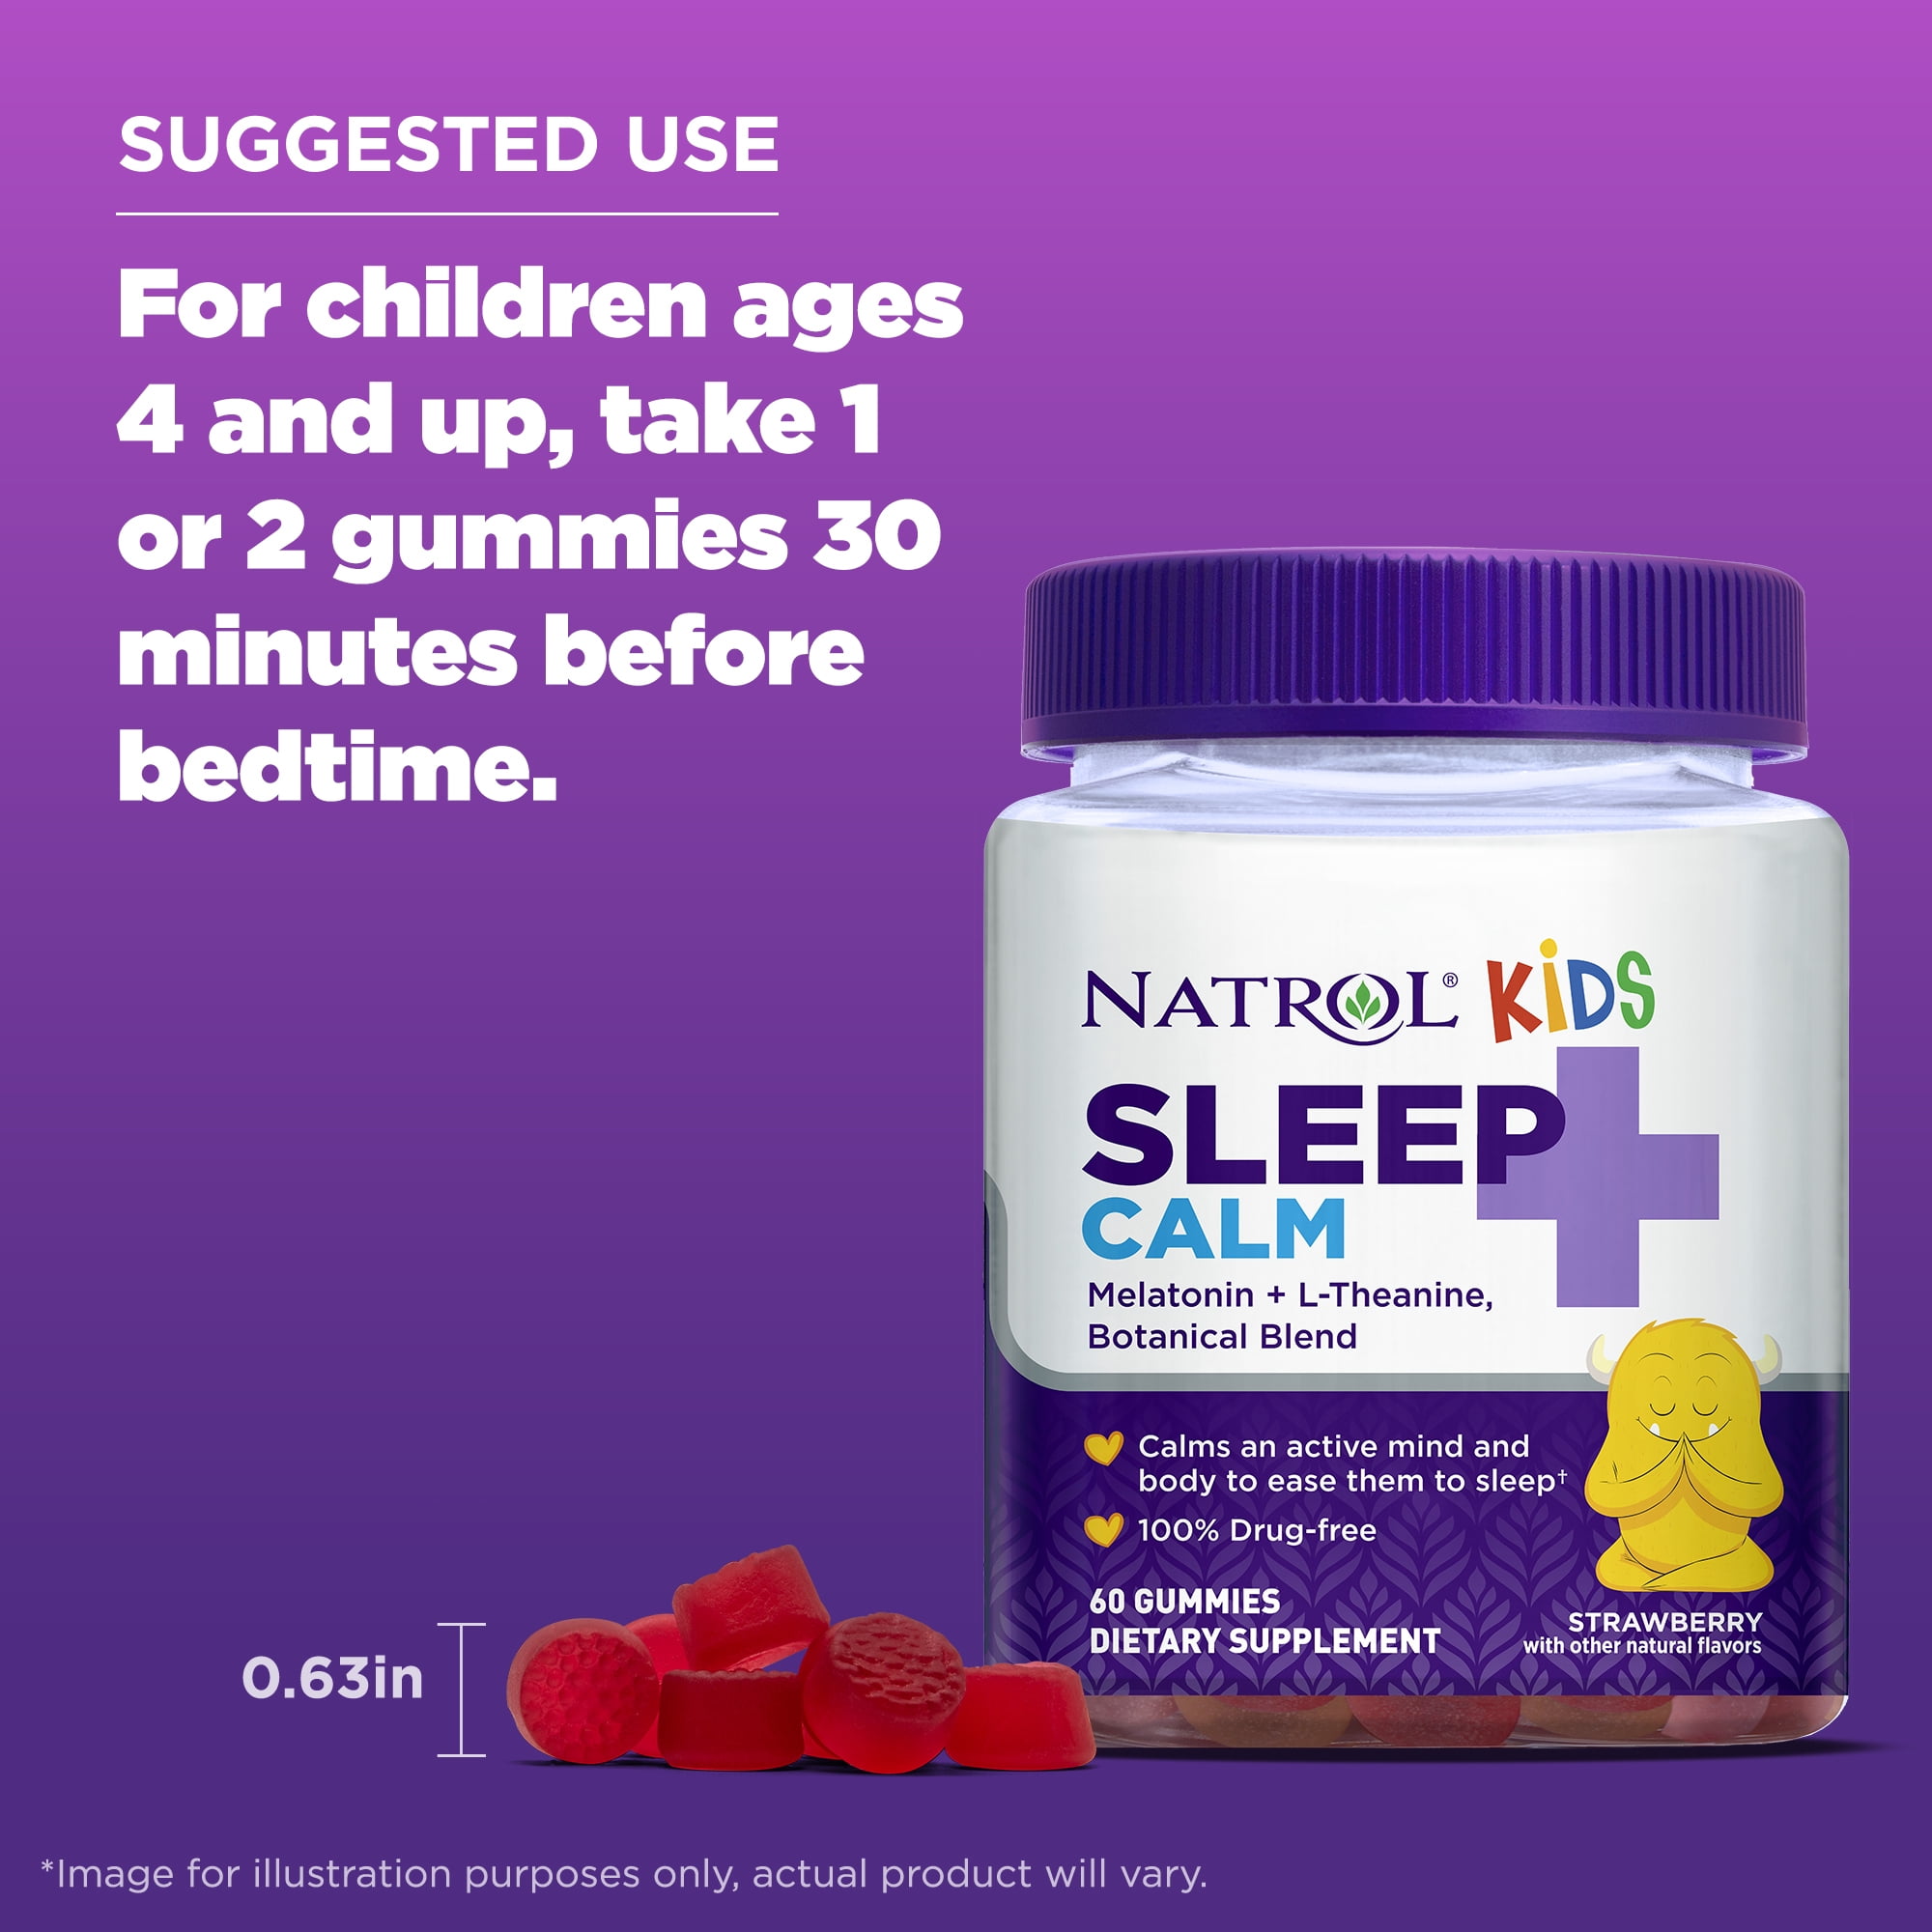 MELATONIN KIDS SLEEP SUPPORT 40TAB NATROL (Melatonina para niños